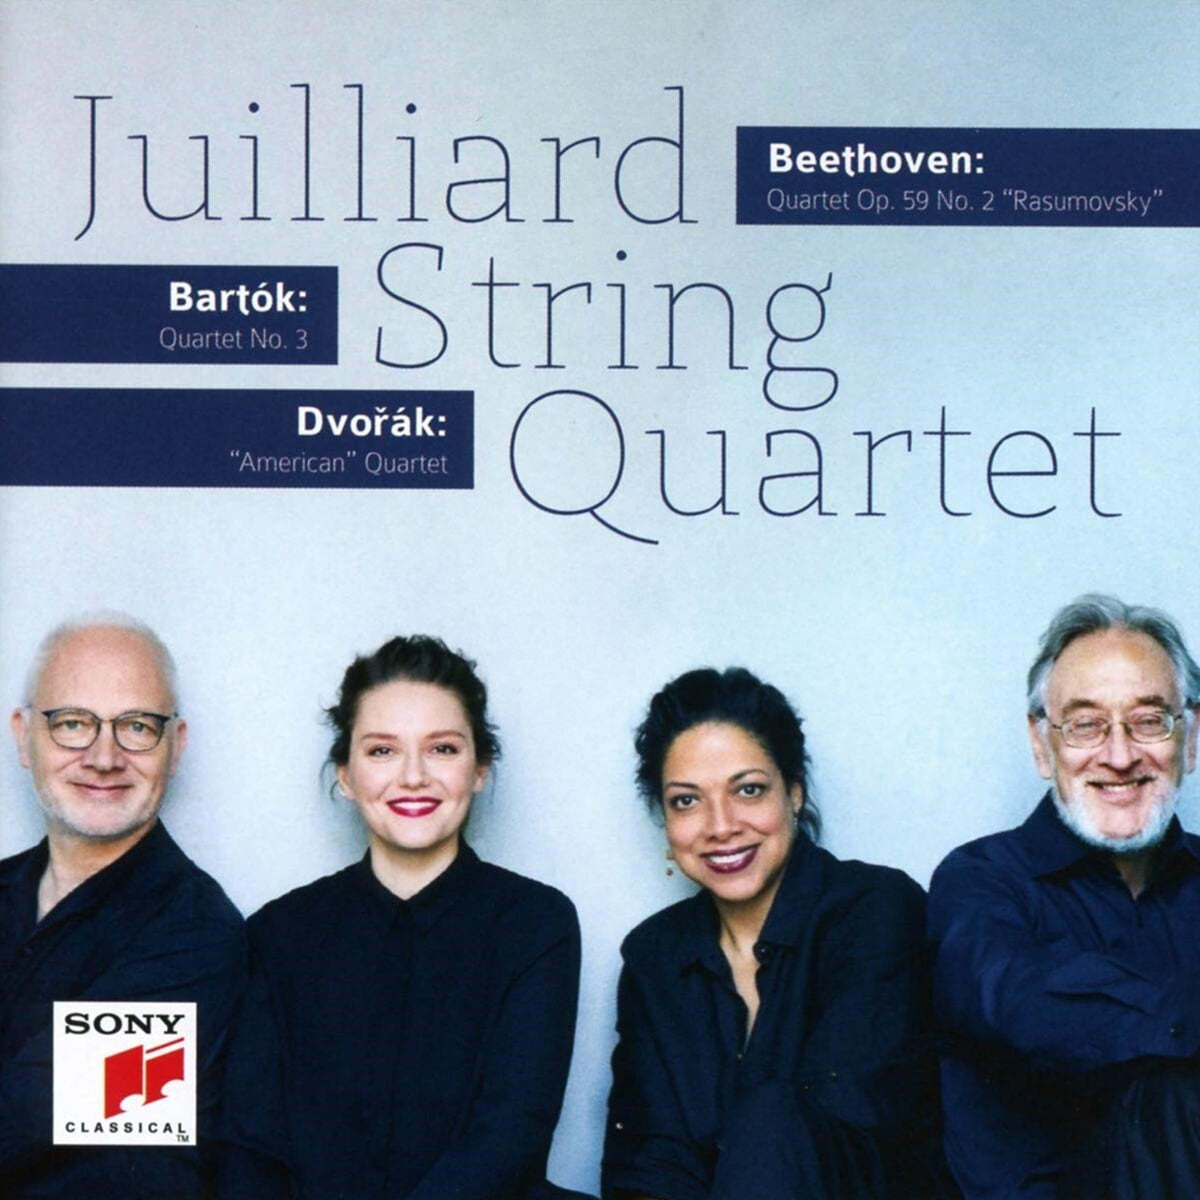 Juilliard String Quartet 베토벤 / 바르톡 / 드보르작: 현악 사중주 (Beethoven: String Quartet Op.59 No.2 / Bartok: String Quartet No.3 Sz.85 / Dvorak: String Quartet Op.96) 